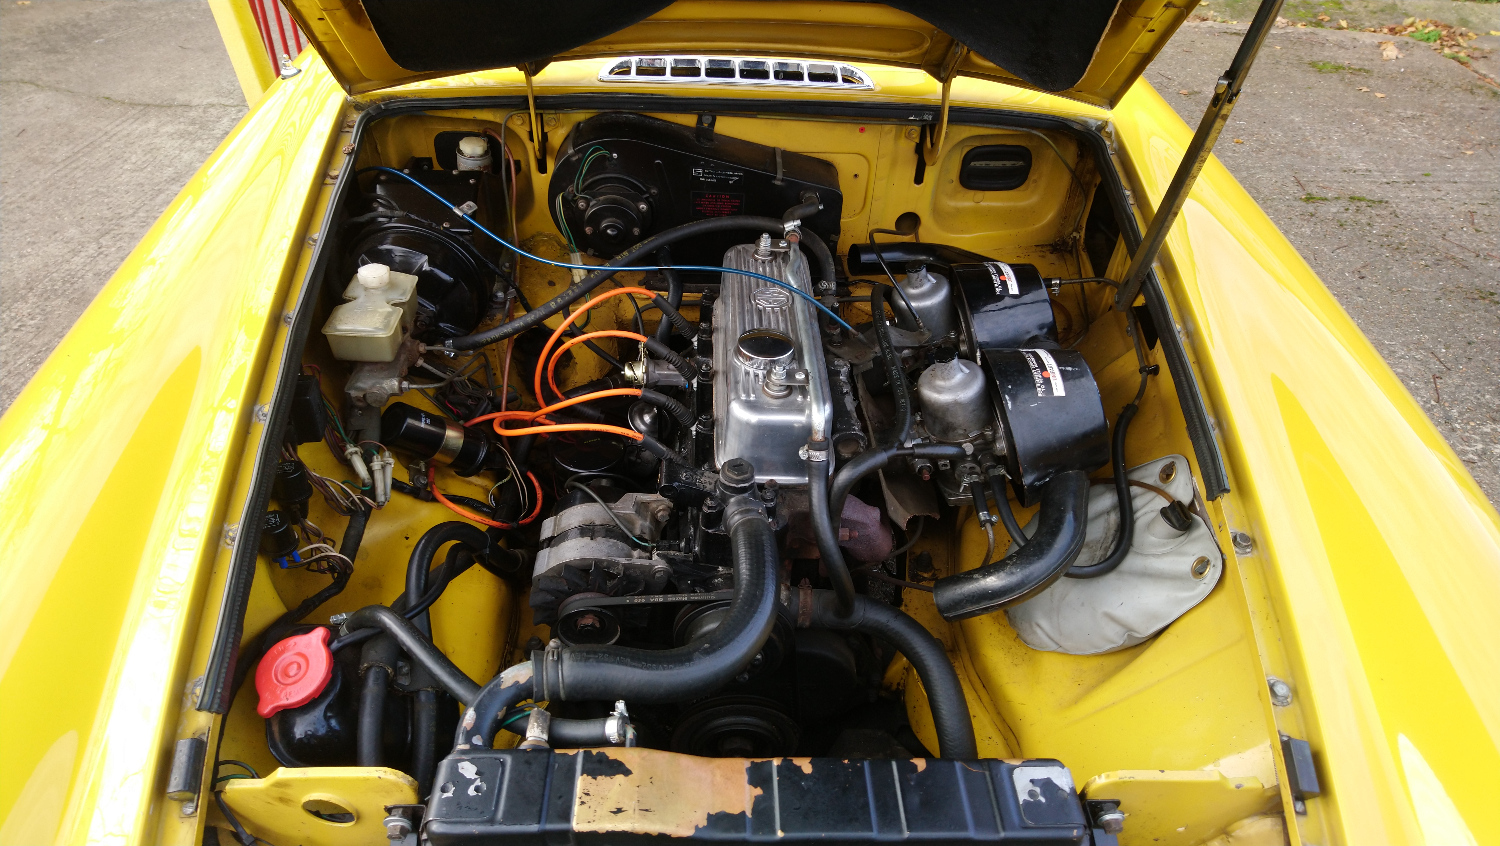 1978 Yellow MGB engine